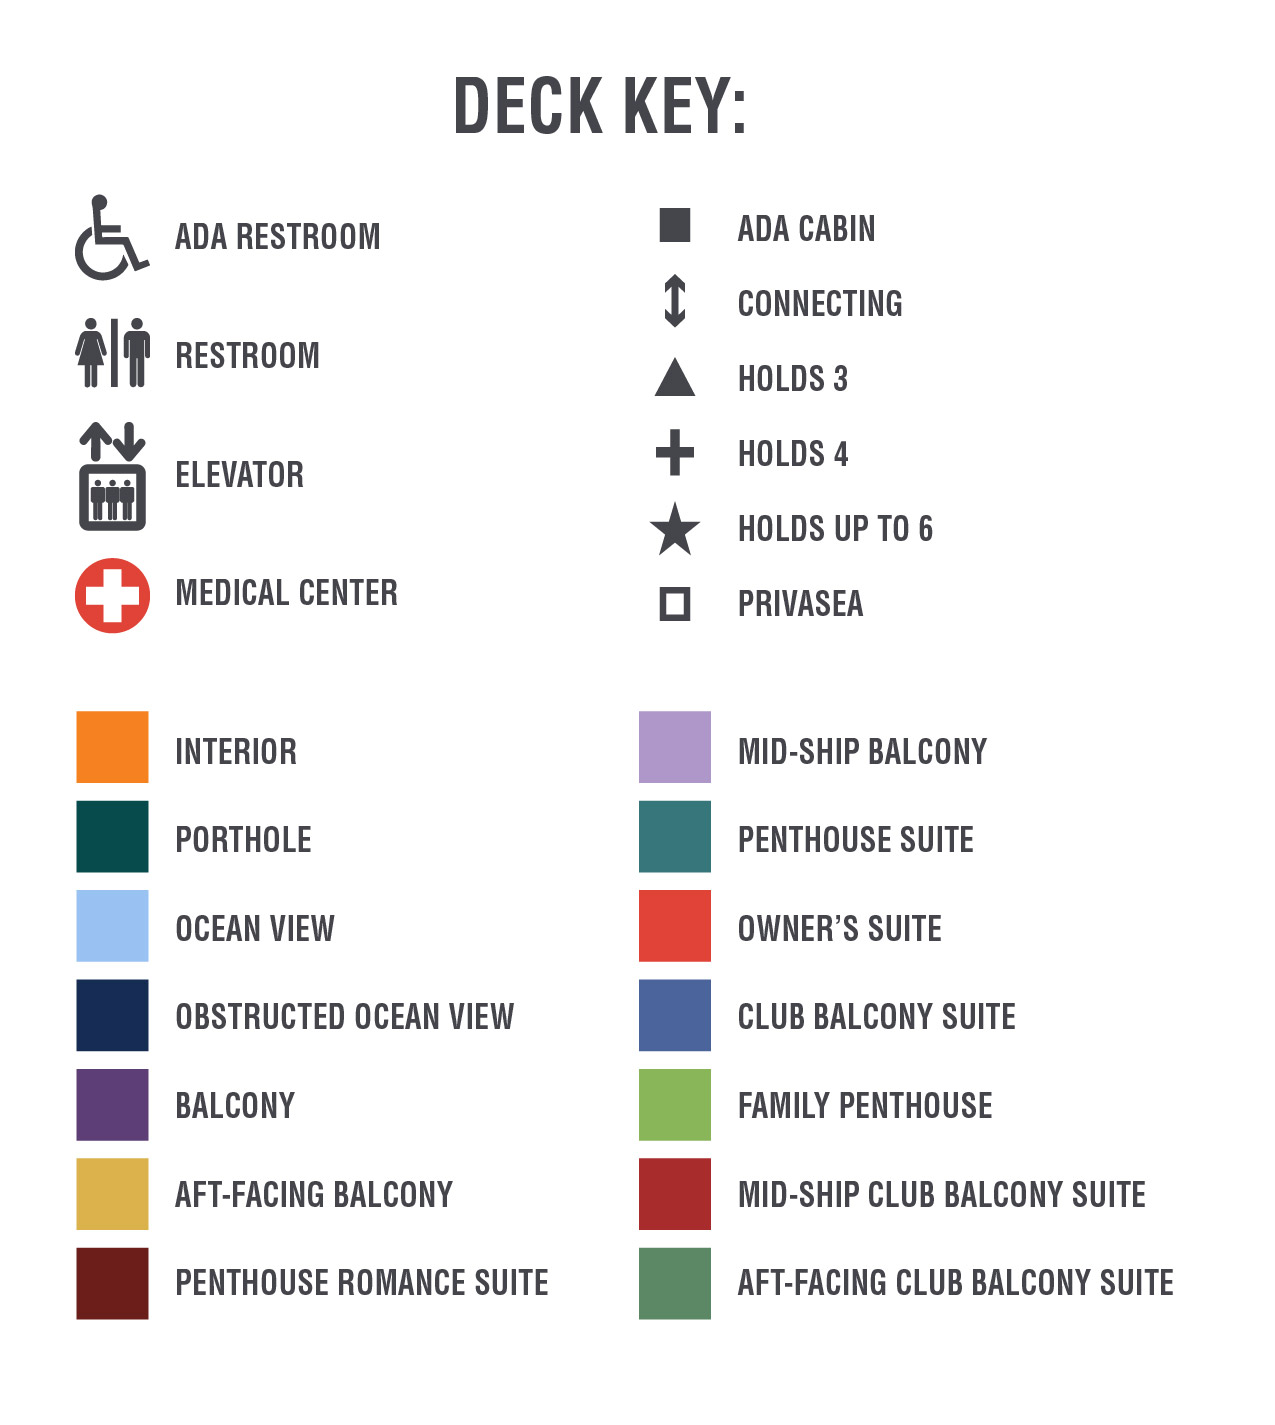 Deck plan key